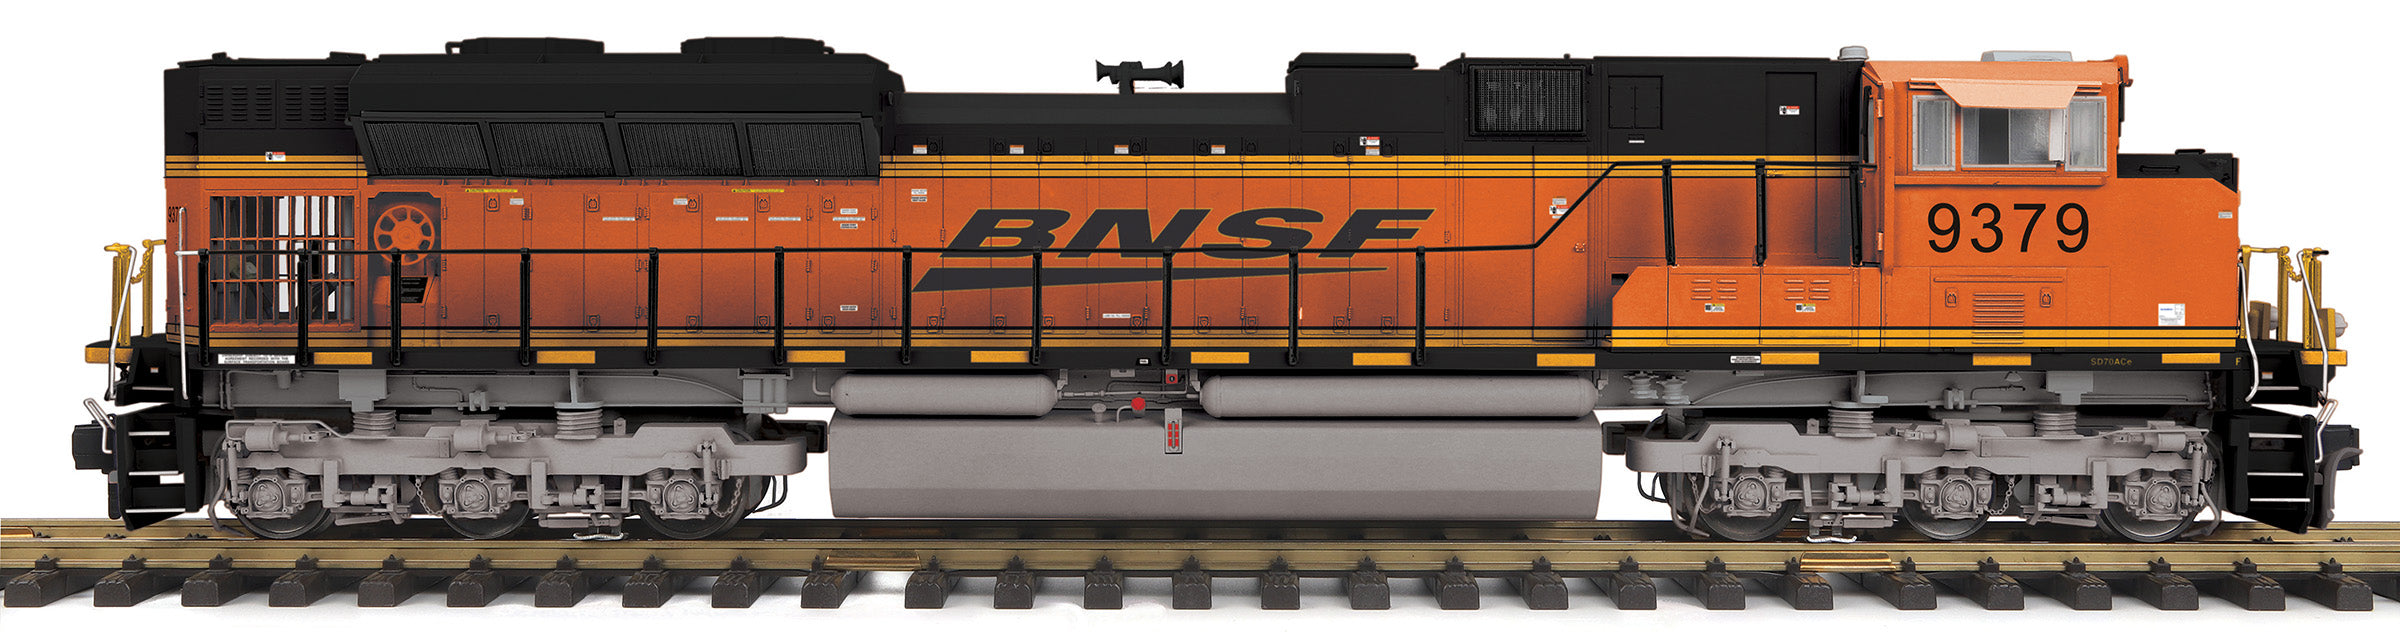 MTH G 70-2152-1 - SD70AH Diesel Engine "BNSF" #9379 w/ PS3